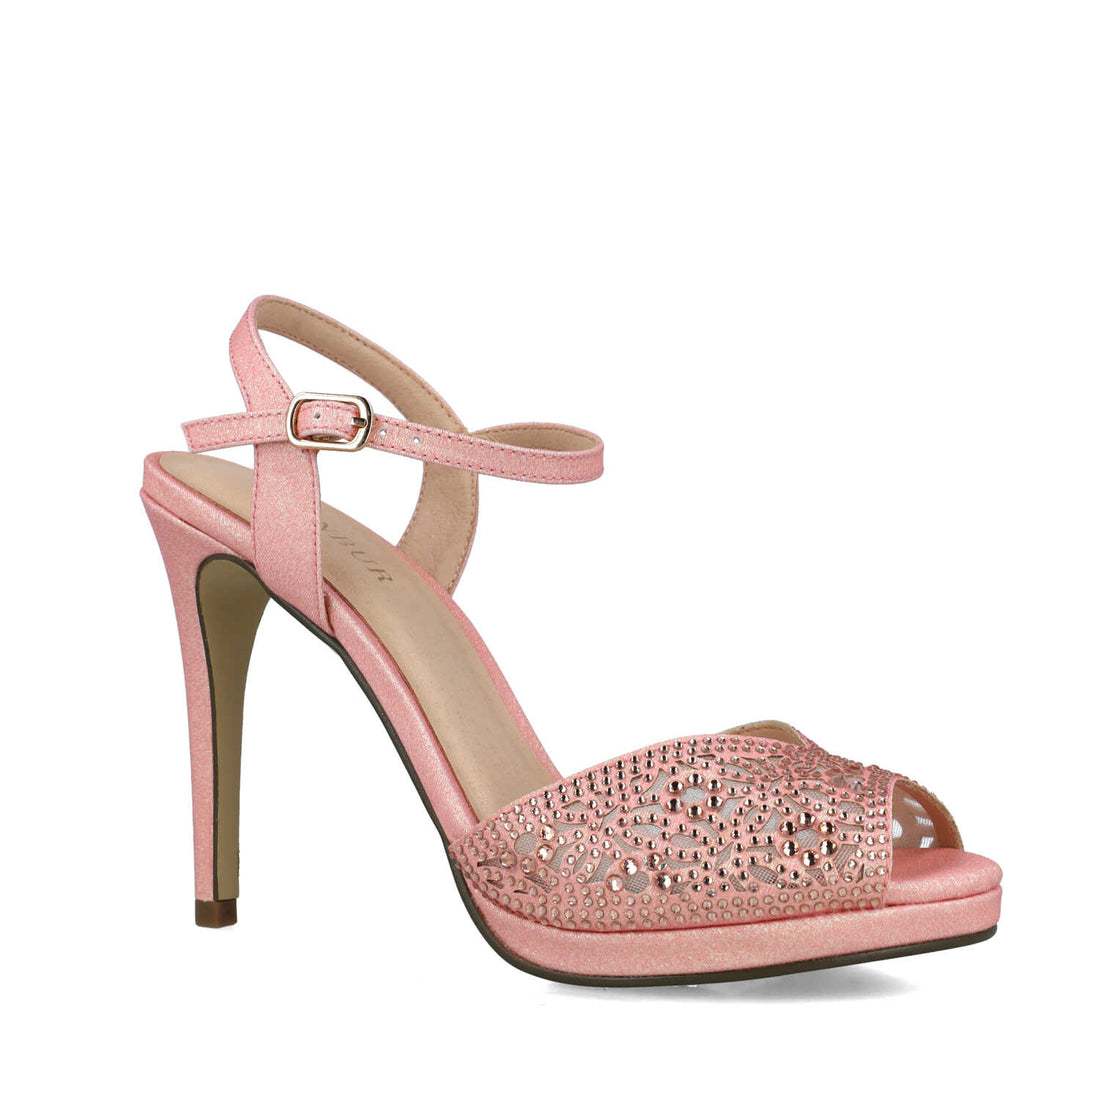 Blush Pink Embellished Peep Toe High Heel Sandals